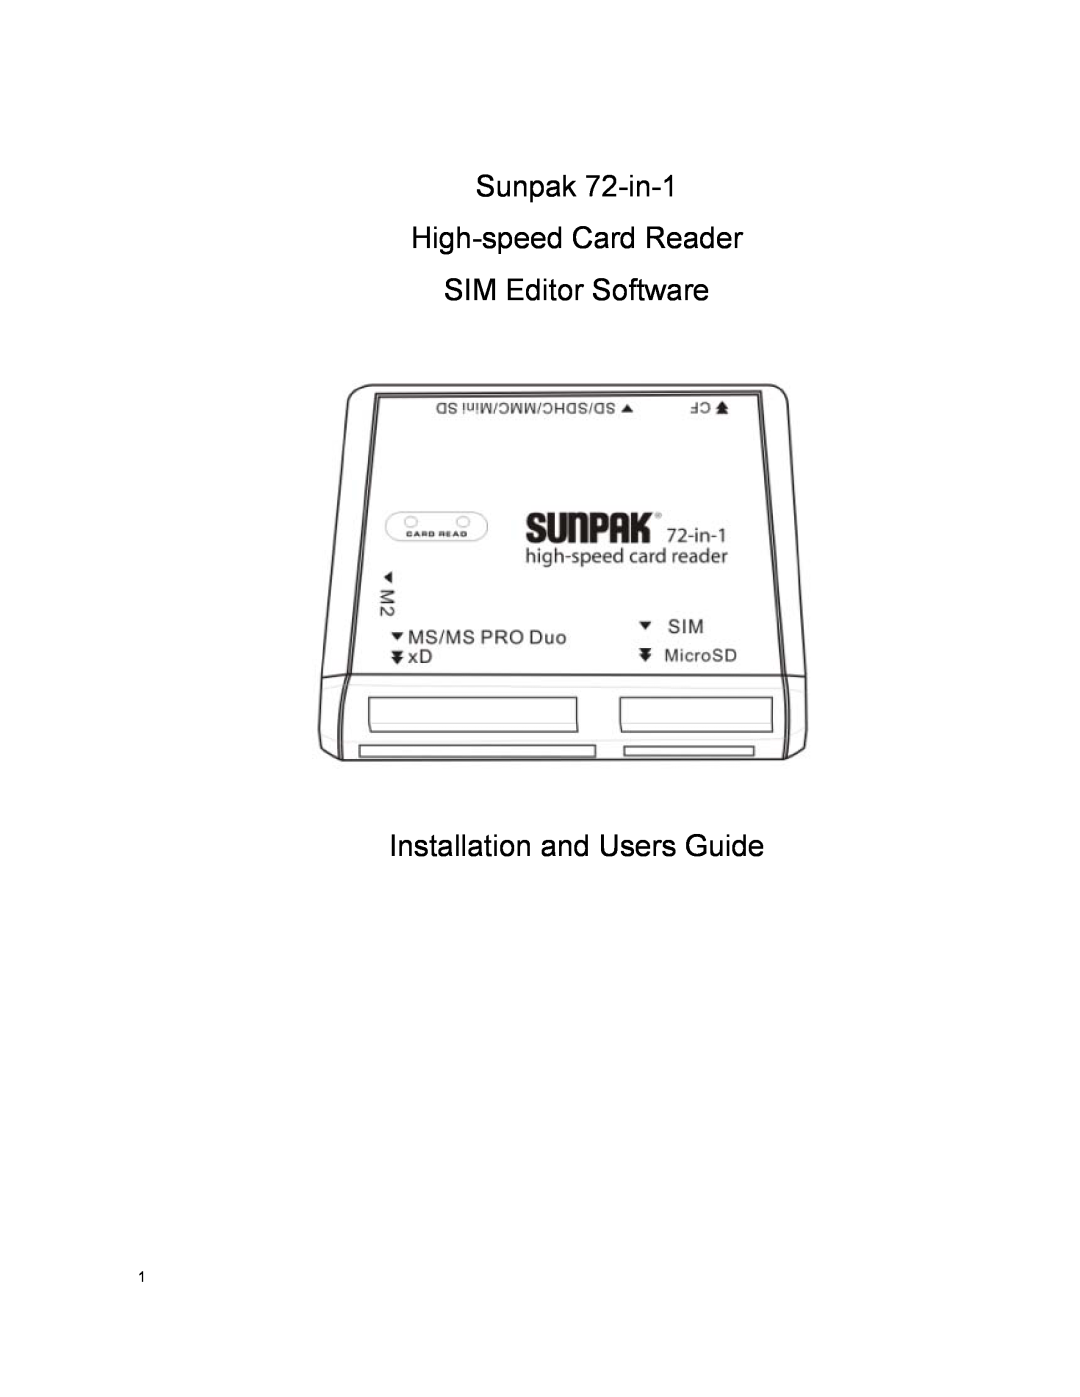 Sunpak ALLIN1-CR-BK manual Sunpak 72-in-1 High-speed Card Reader SIM Editor Software, Installation and Users Guide 